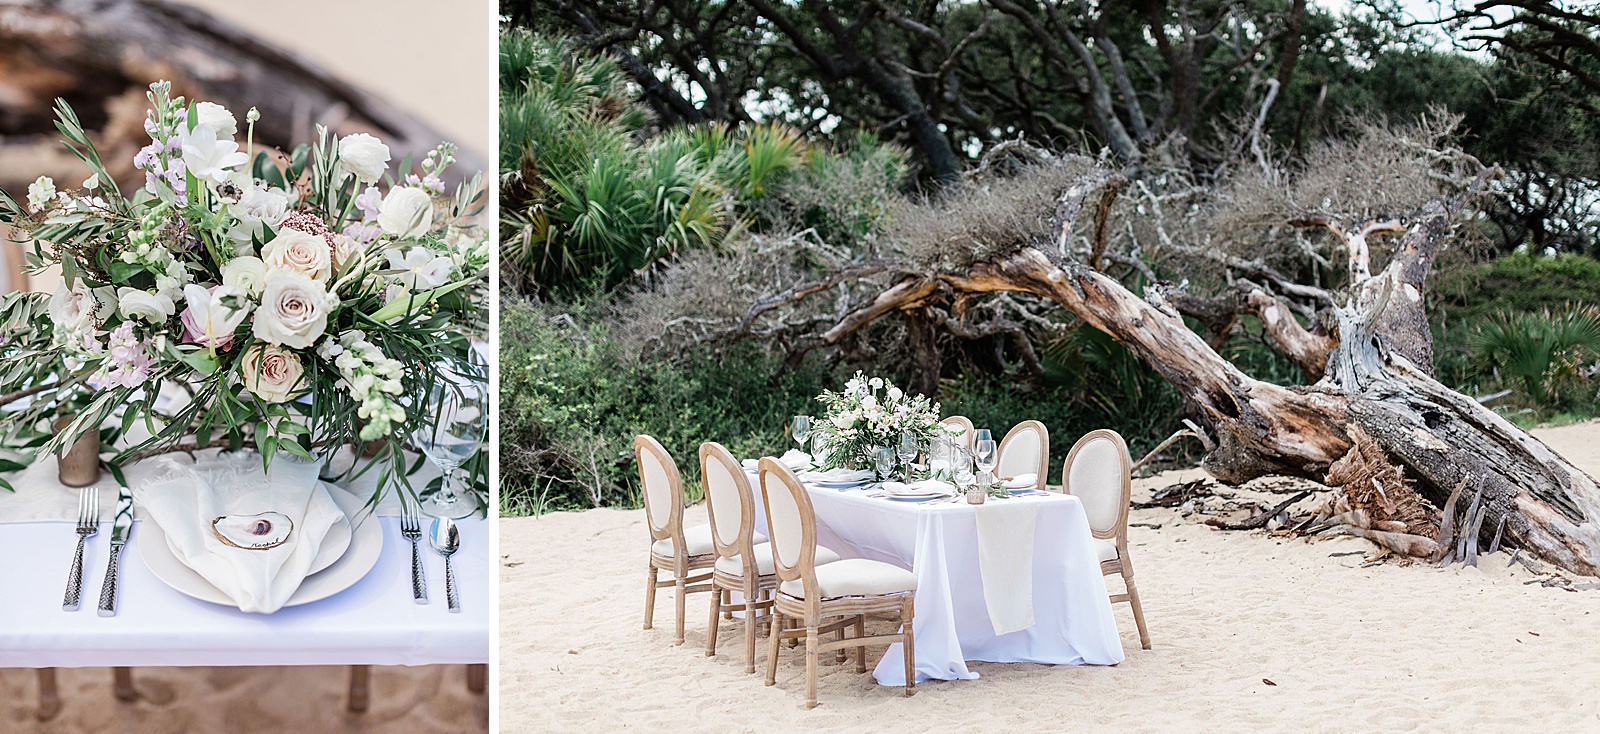 Hamptons Inspired Styled Beach Wedding designed by NYC Wedding Planner, Poppy + Lynn